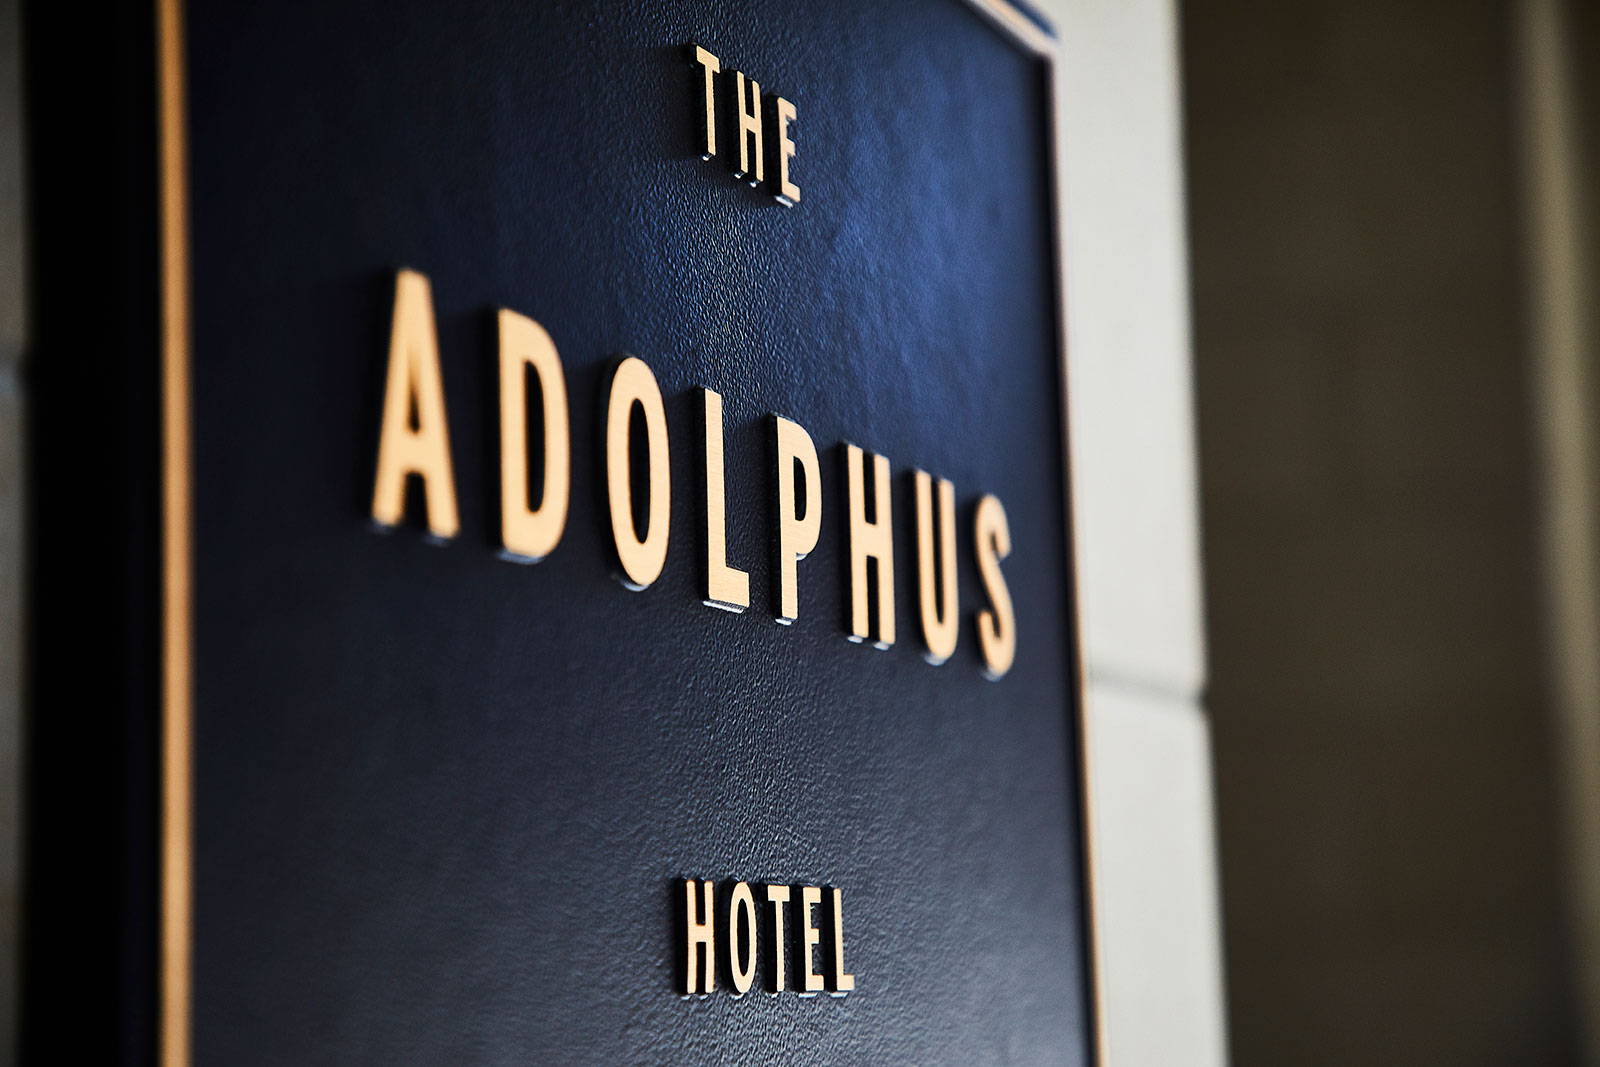 The Adolphus hotel sign